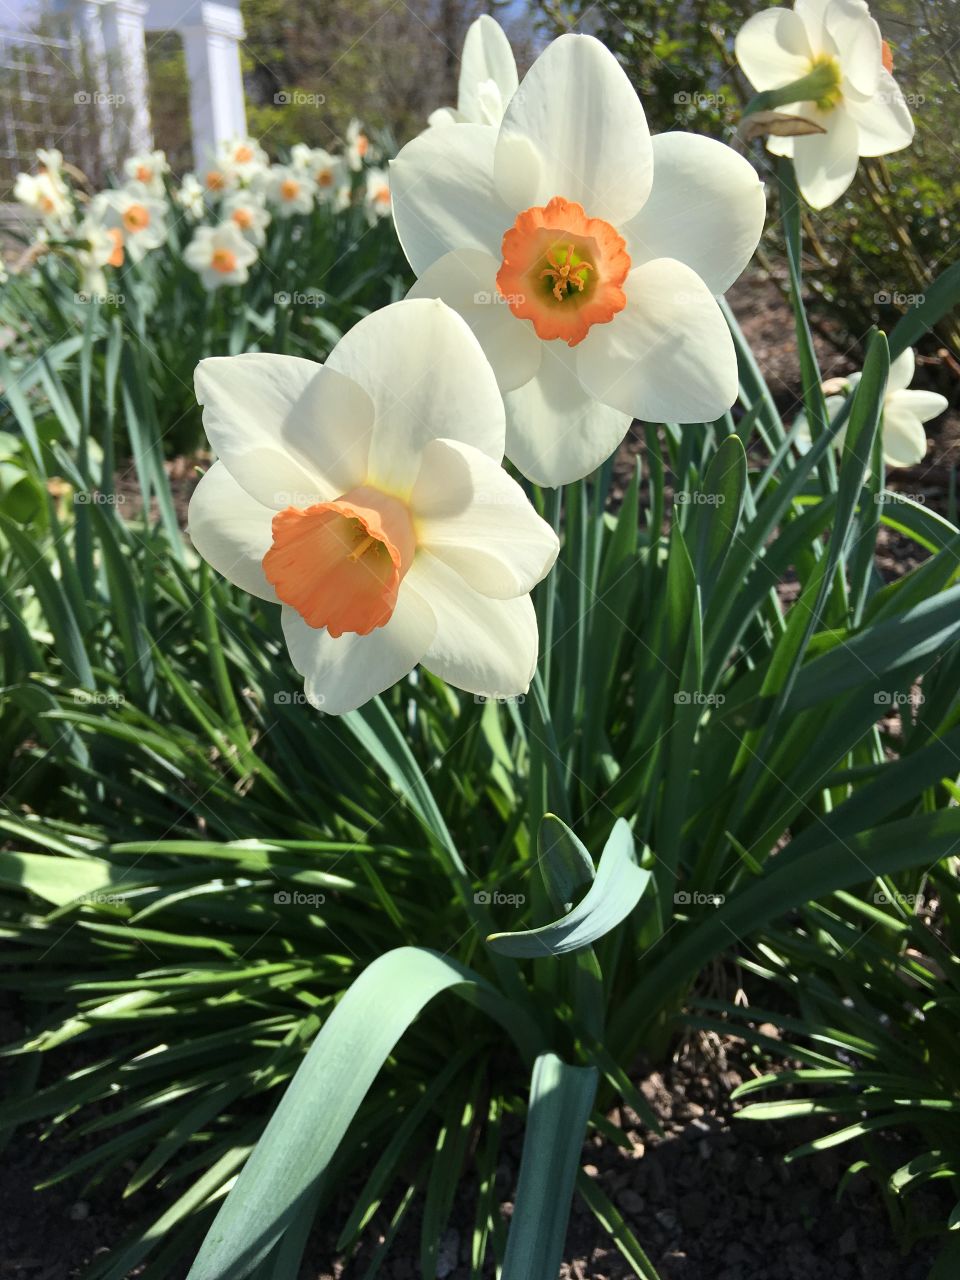 Orange and white daffodils located at Delaware Park Buffalo, NY